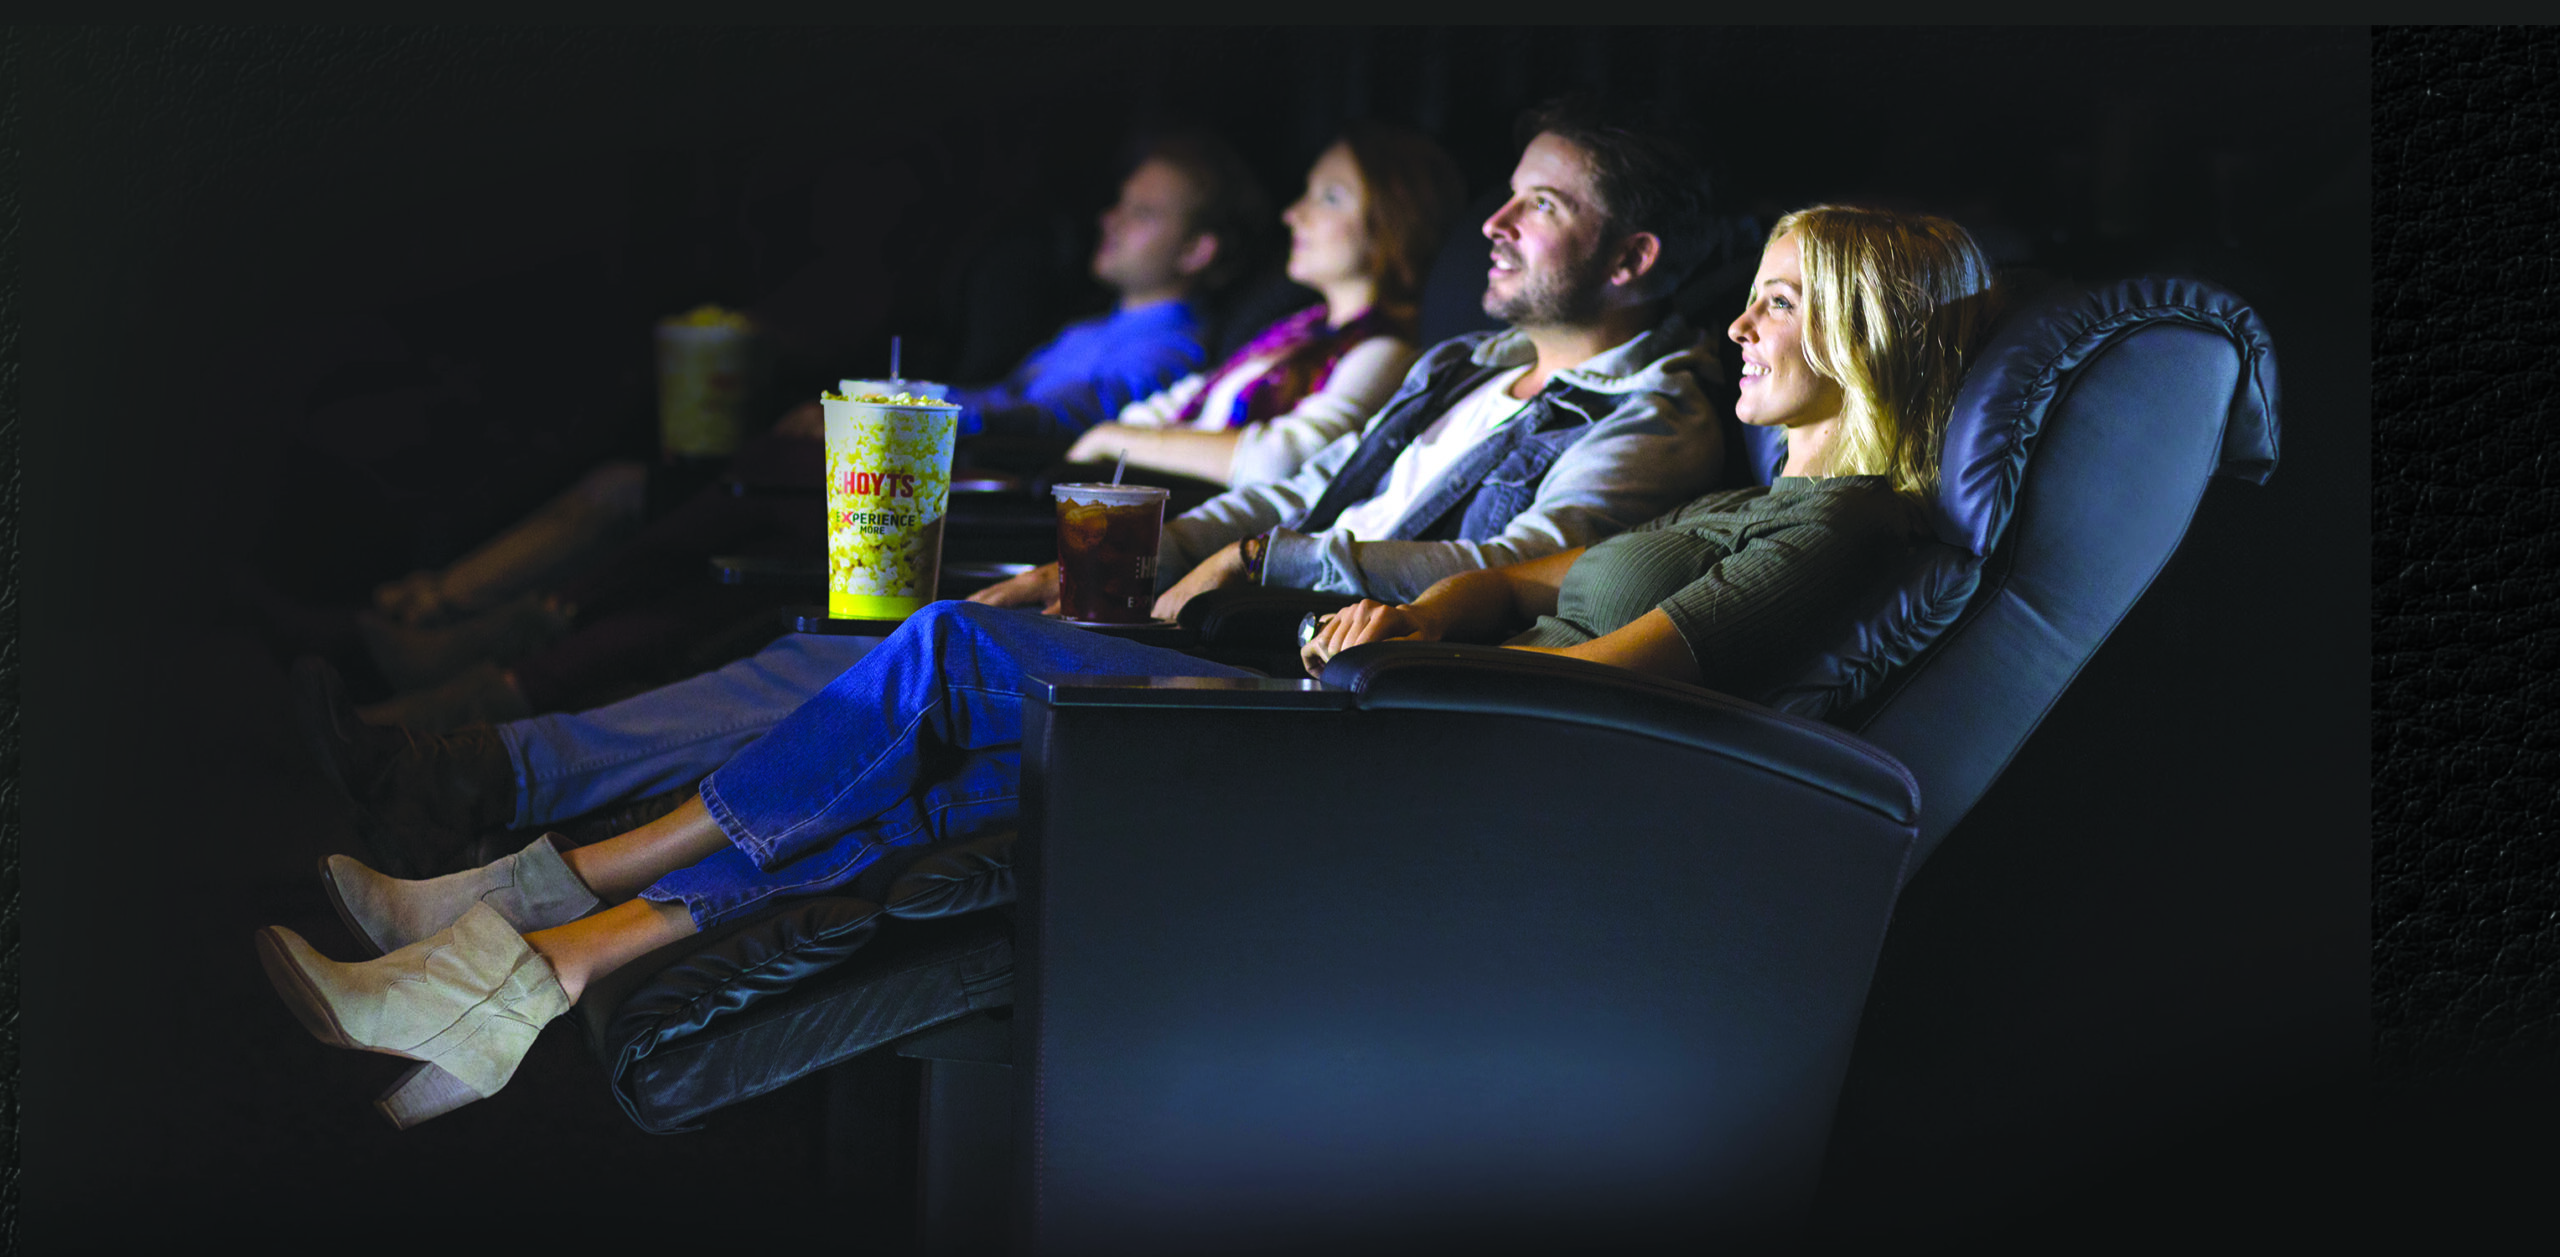 Let yourself recline at Hoyts cinema